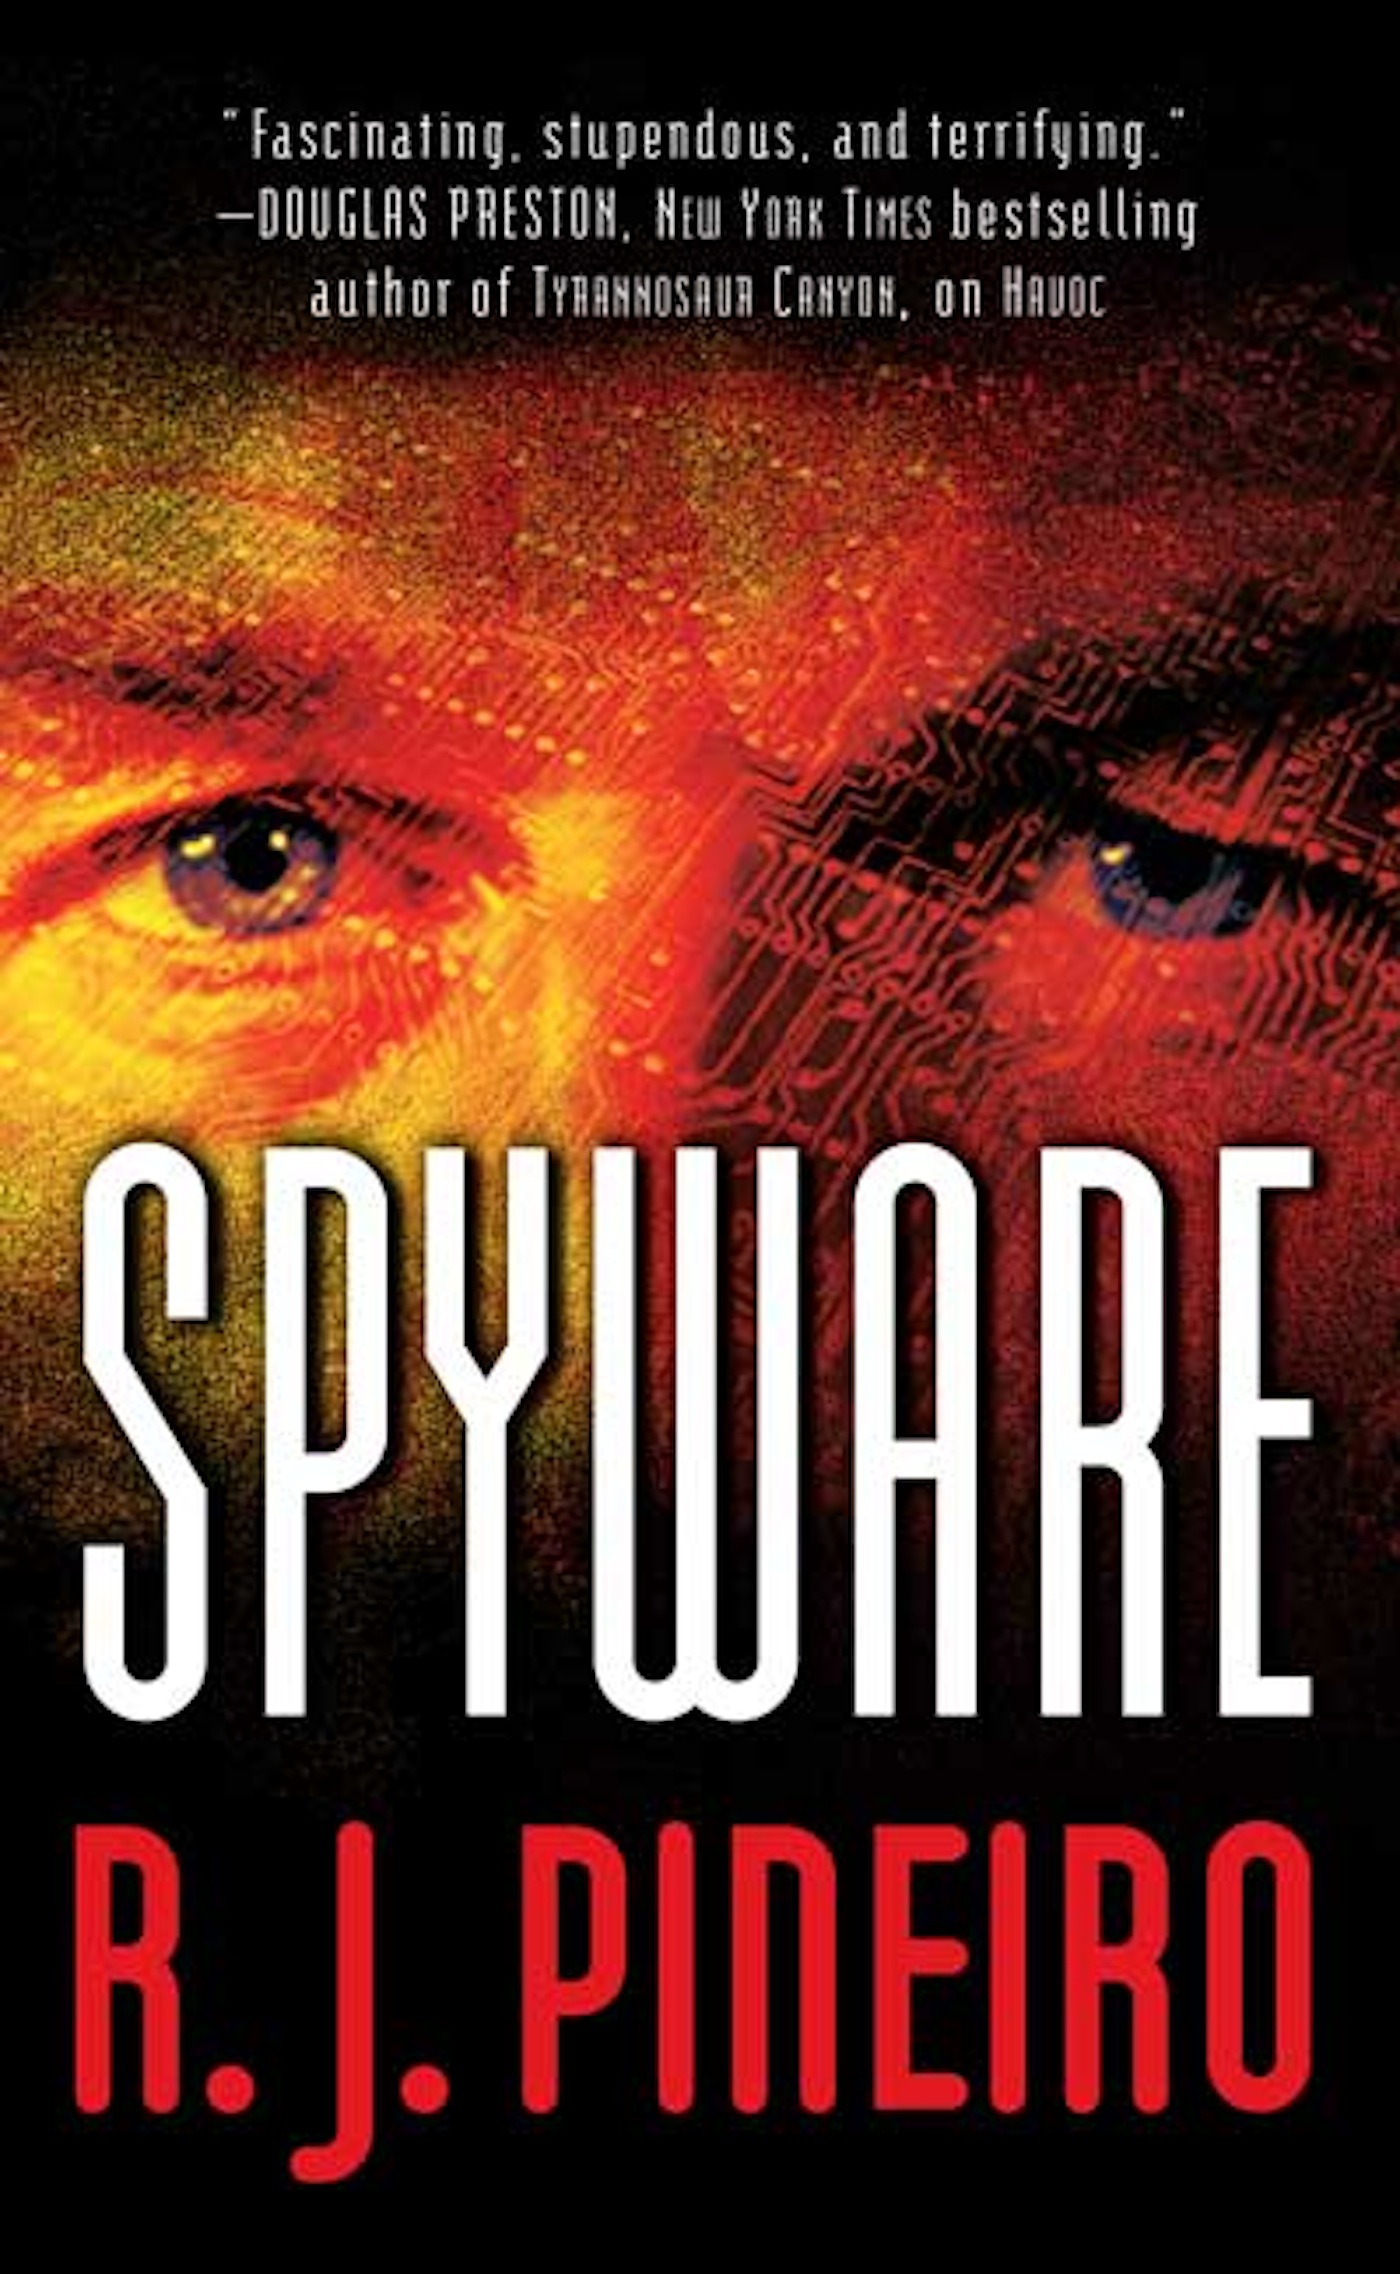 Spyware : A Thriller by R. J. Pineiro